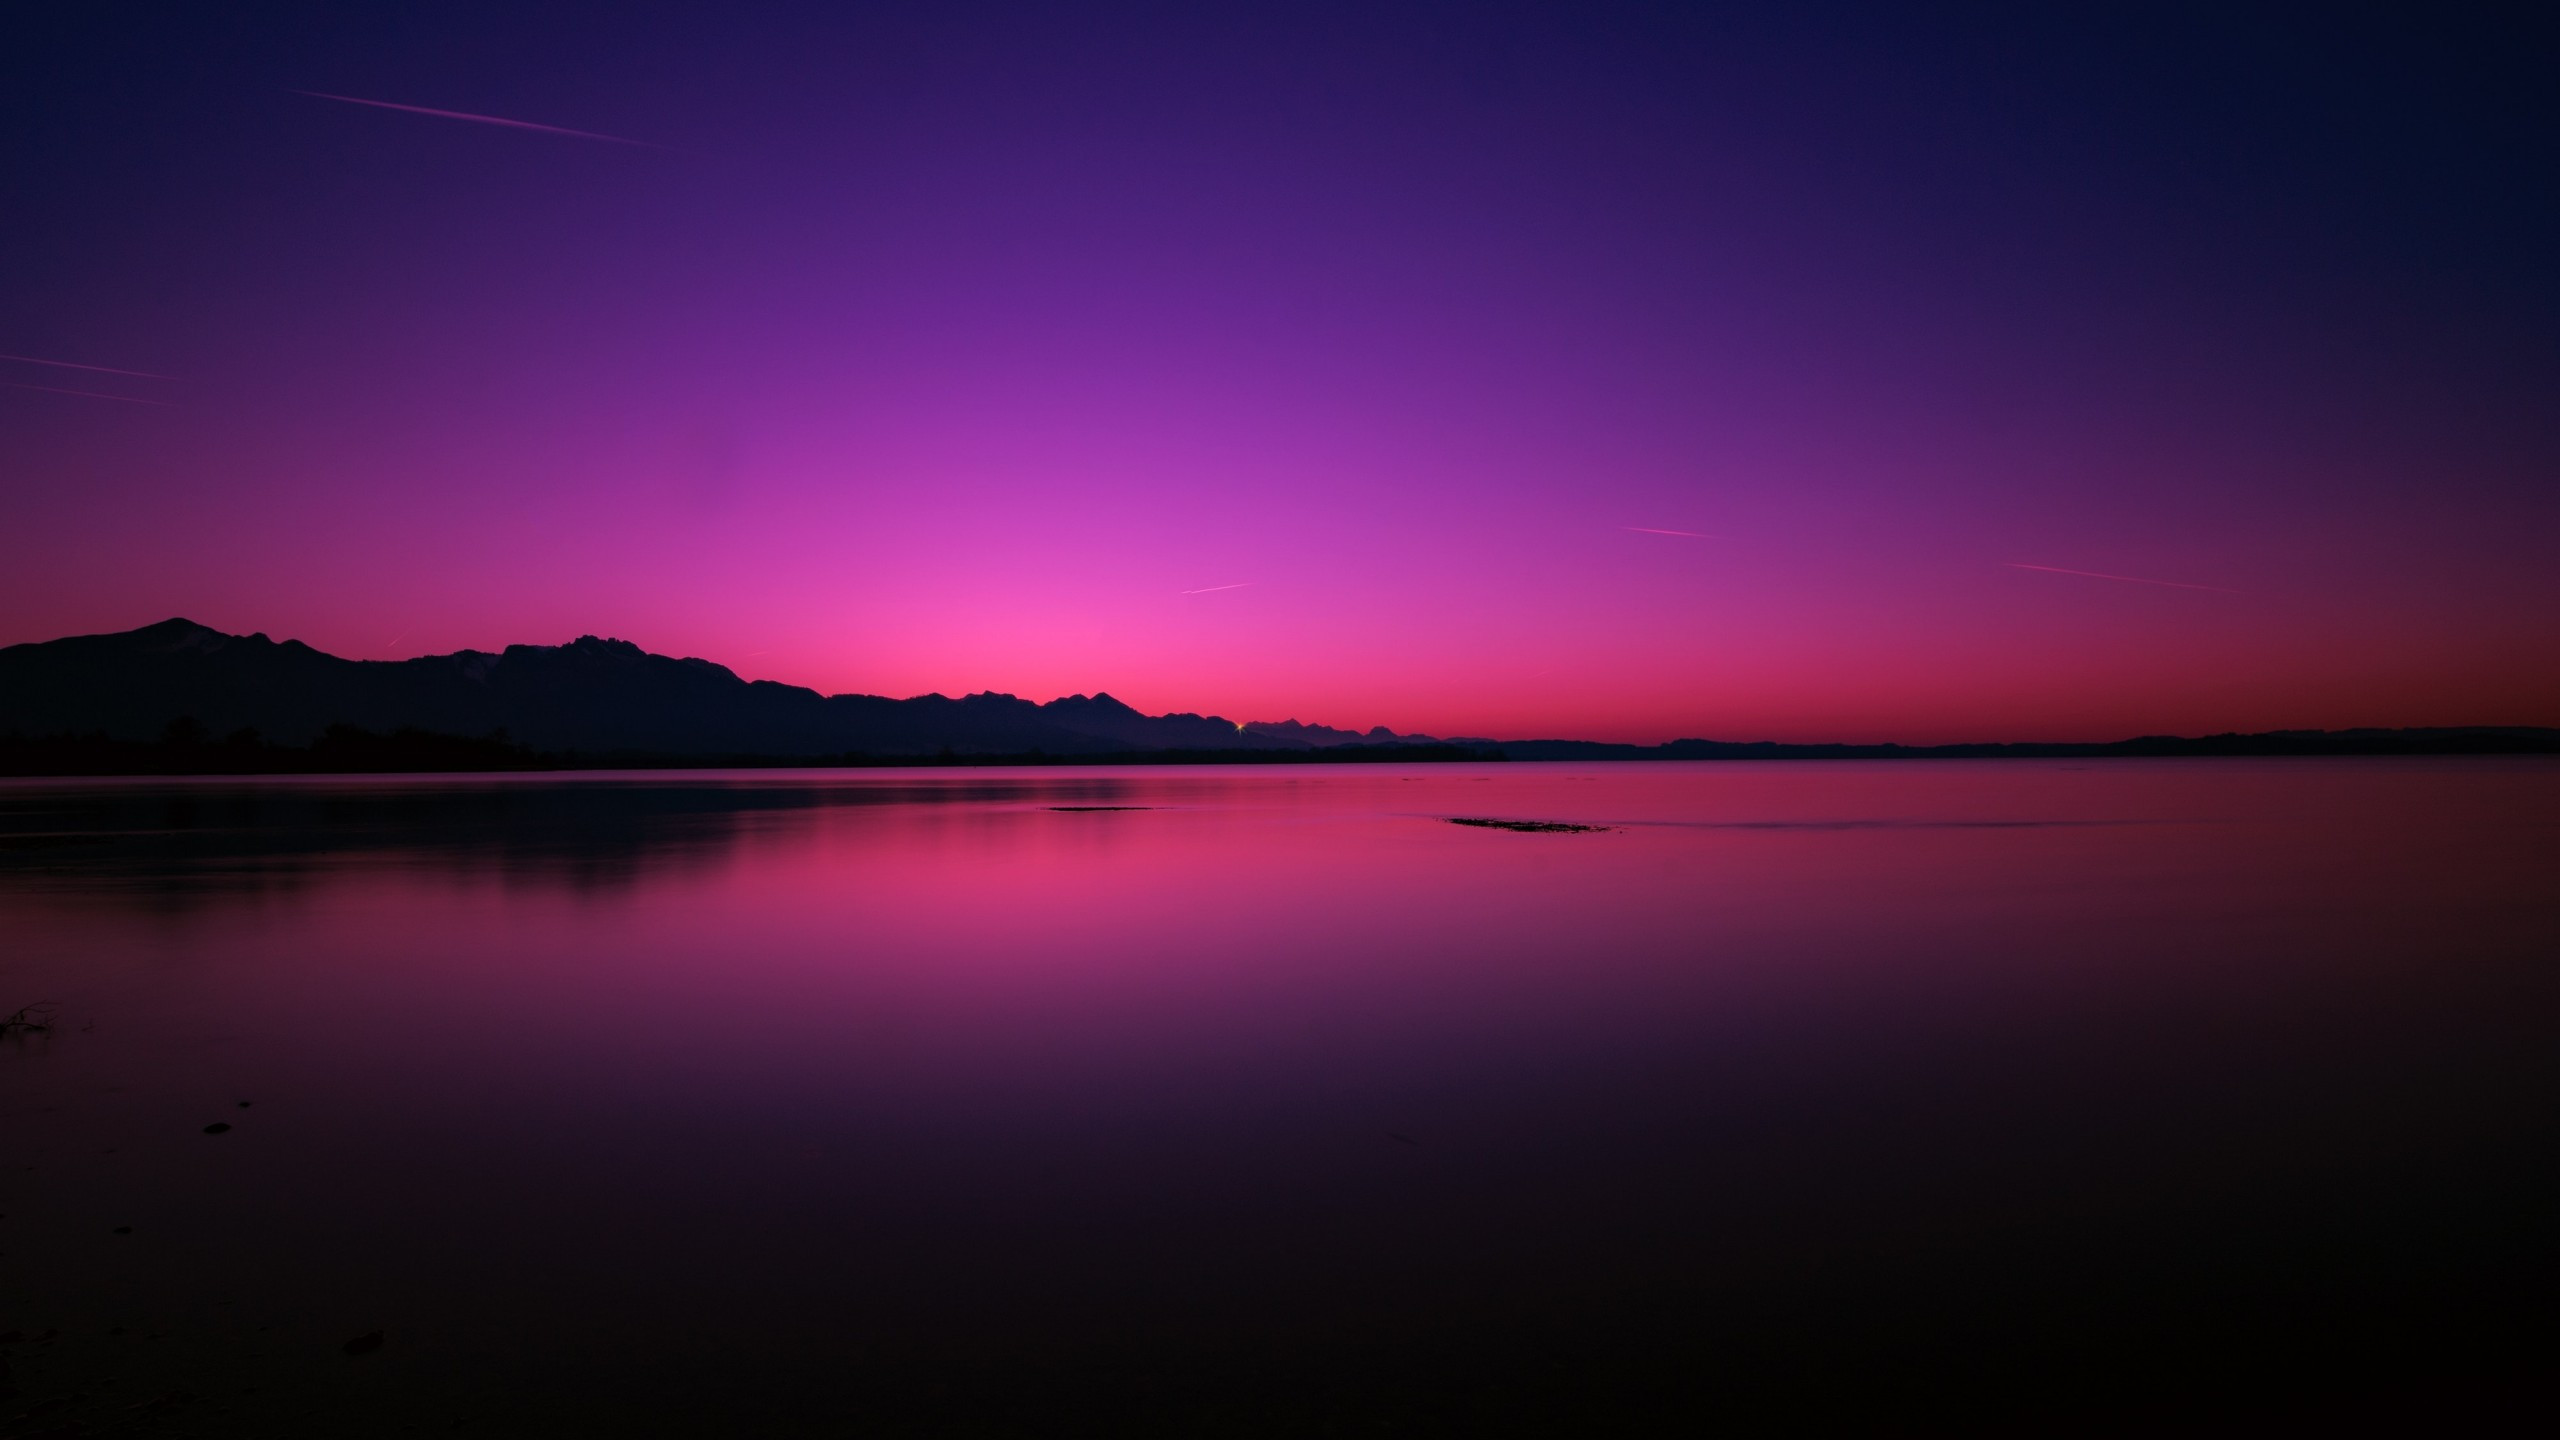 Download 2560x1440 Twilight, Sunset, Horizon, Purple Sky Wallpaper for iMac 27 inch